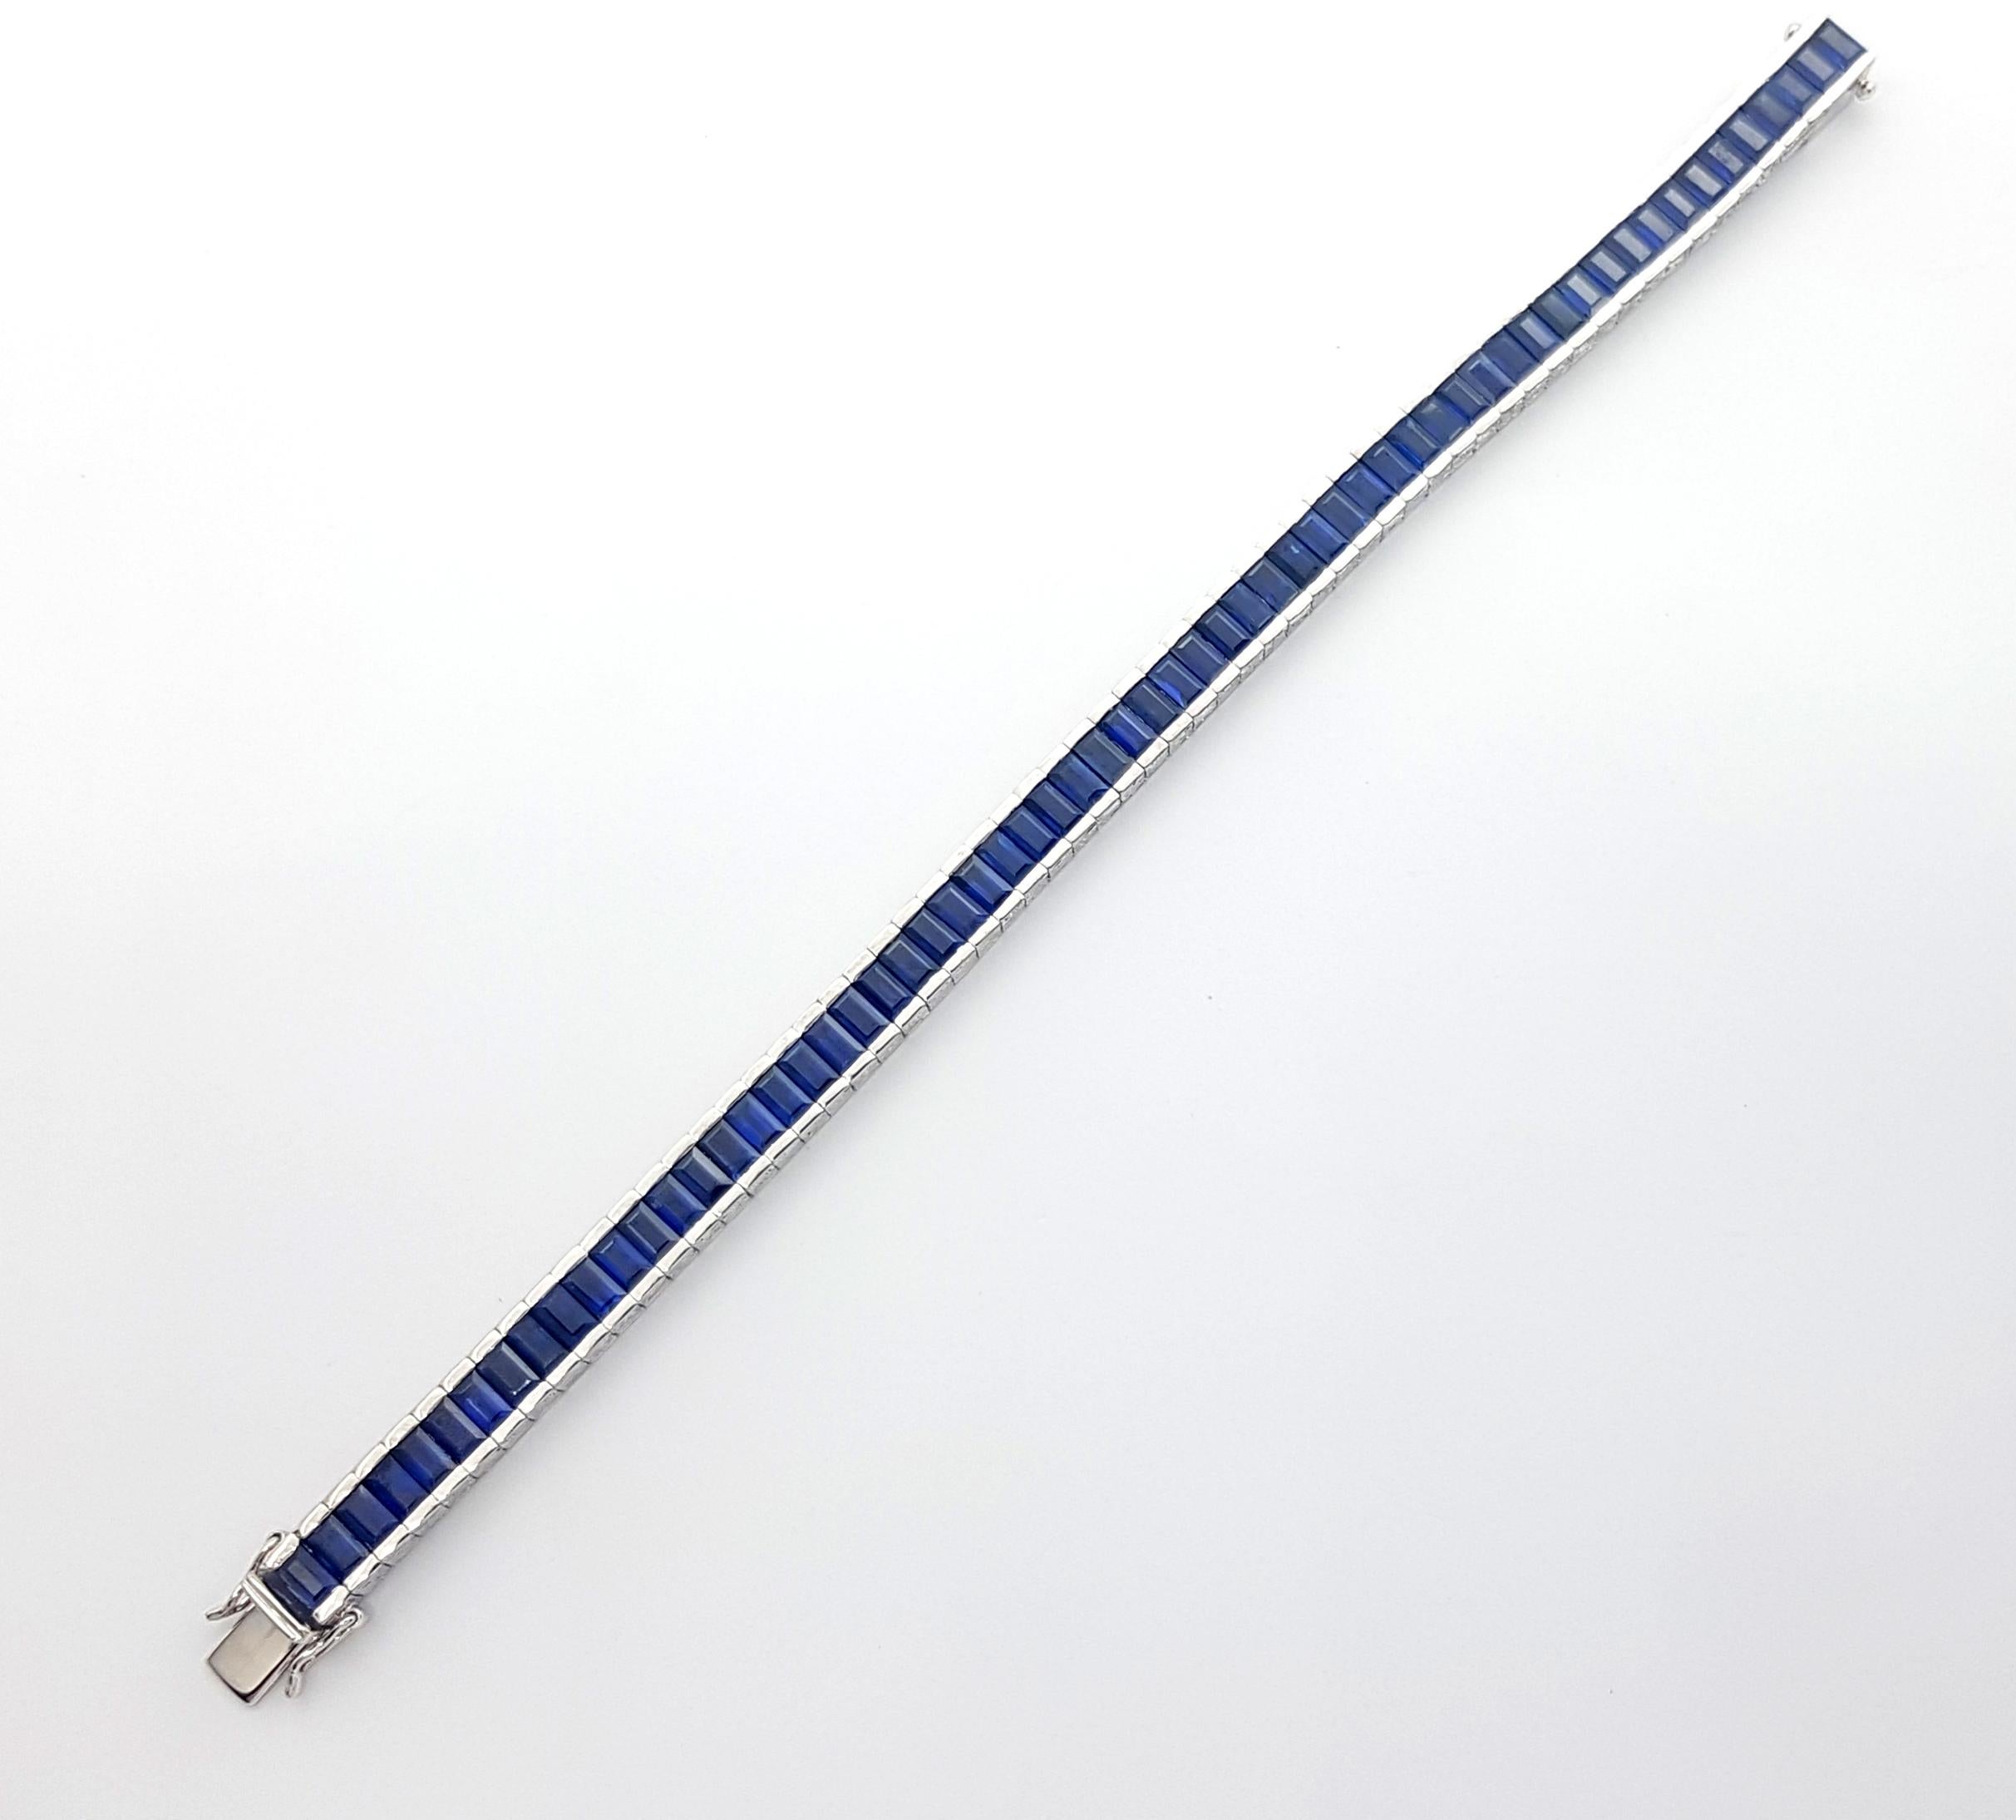 Blue Sapphire 22.39 carats Bracelet set in Platinum 950 Settings

Width:  0.6 cm 
Length: 18.0 cm
Total Weight: 61.58 grams

